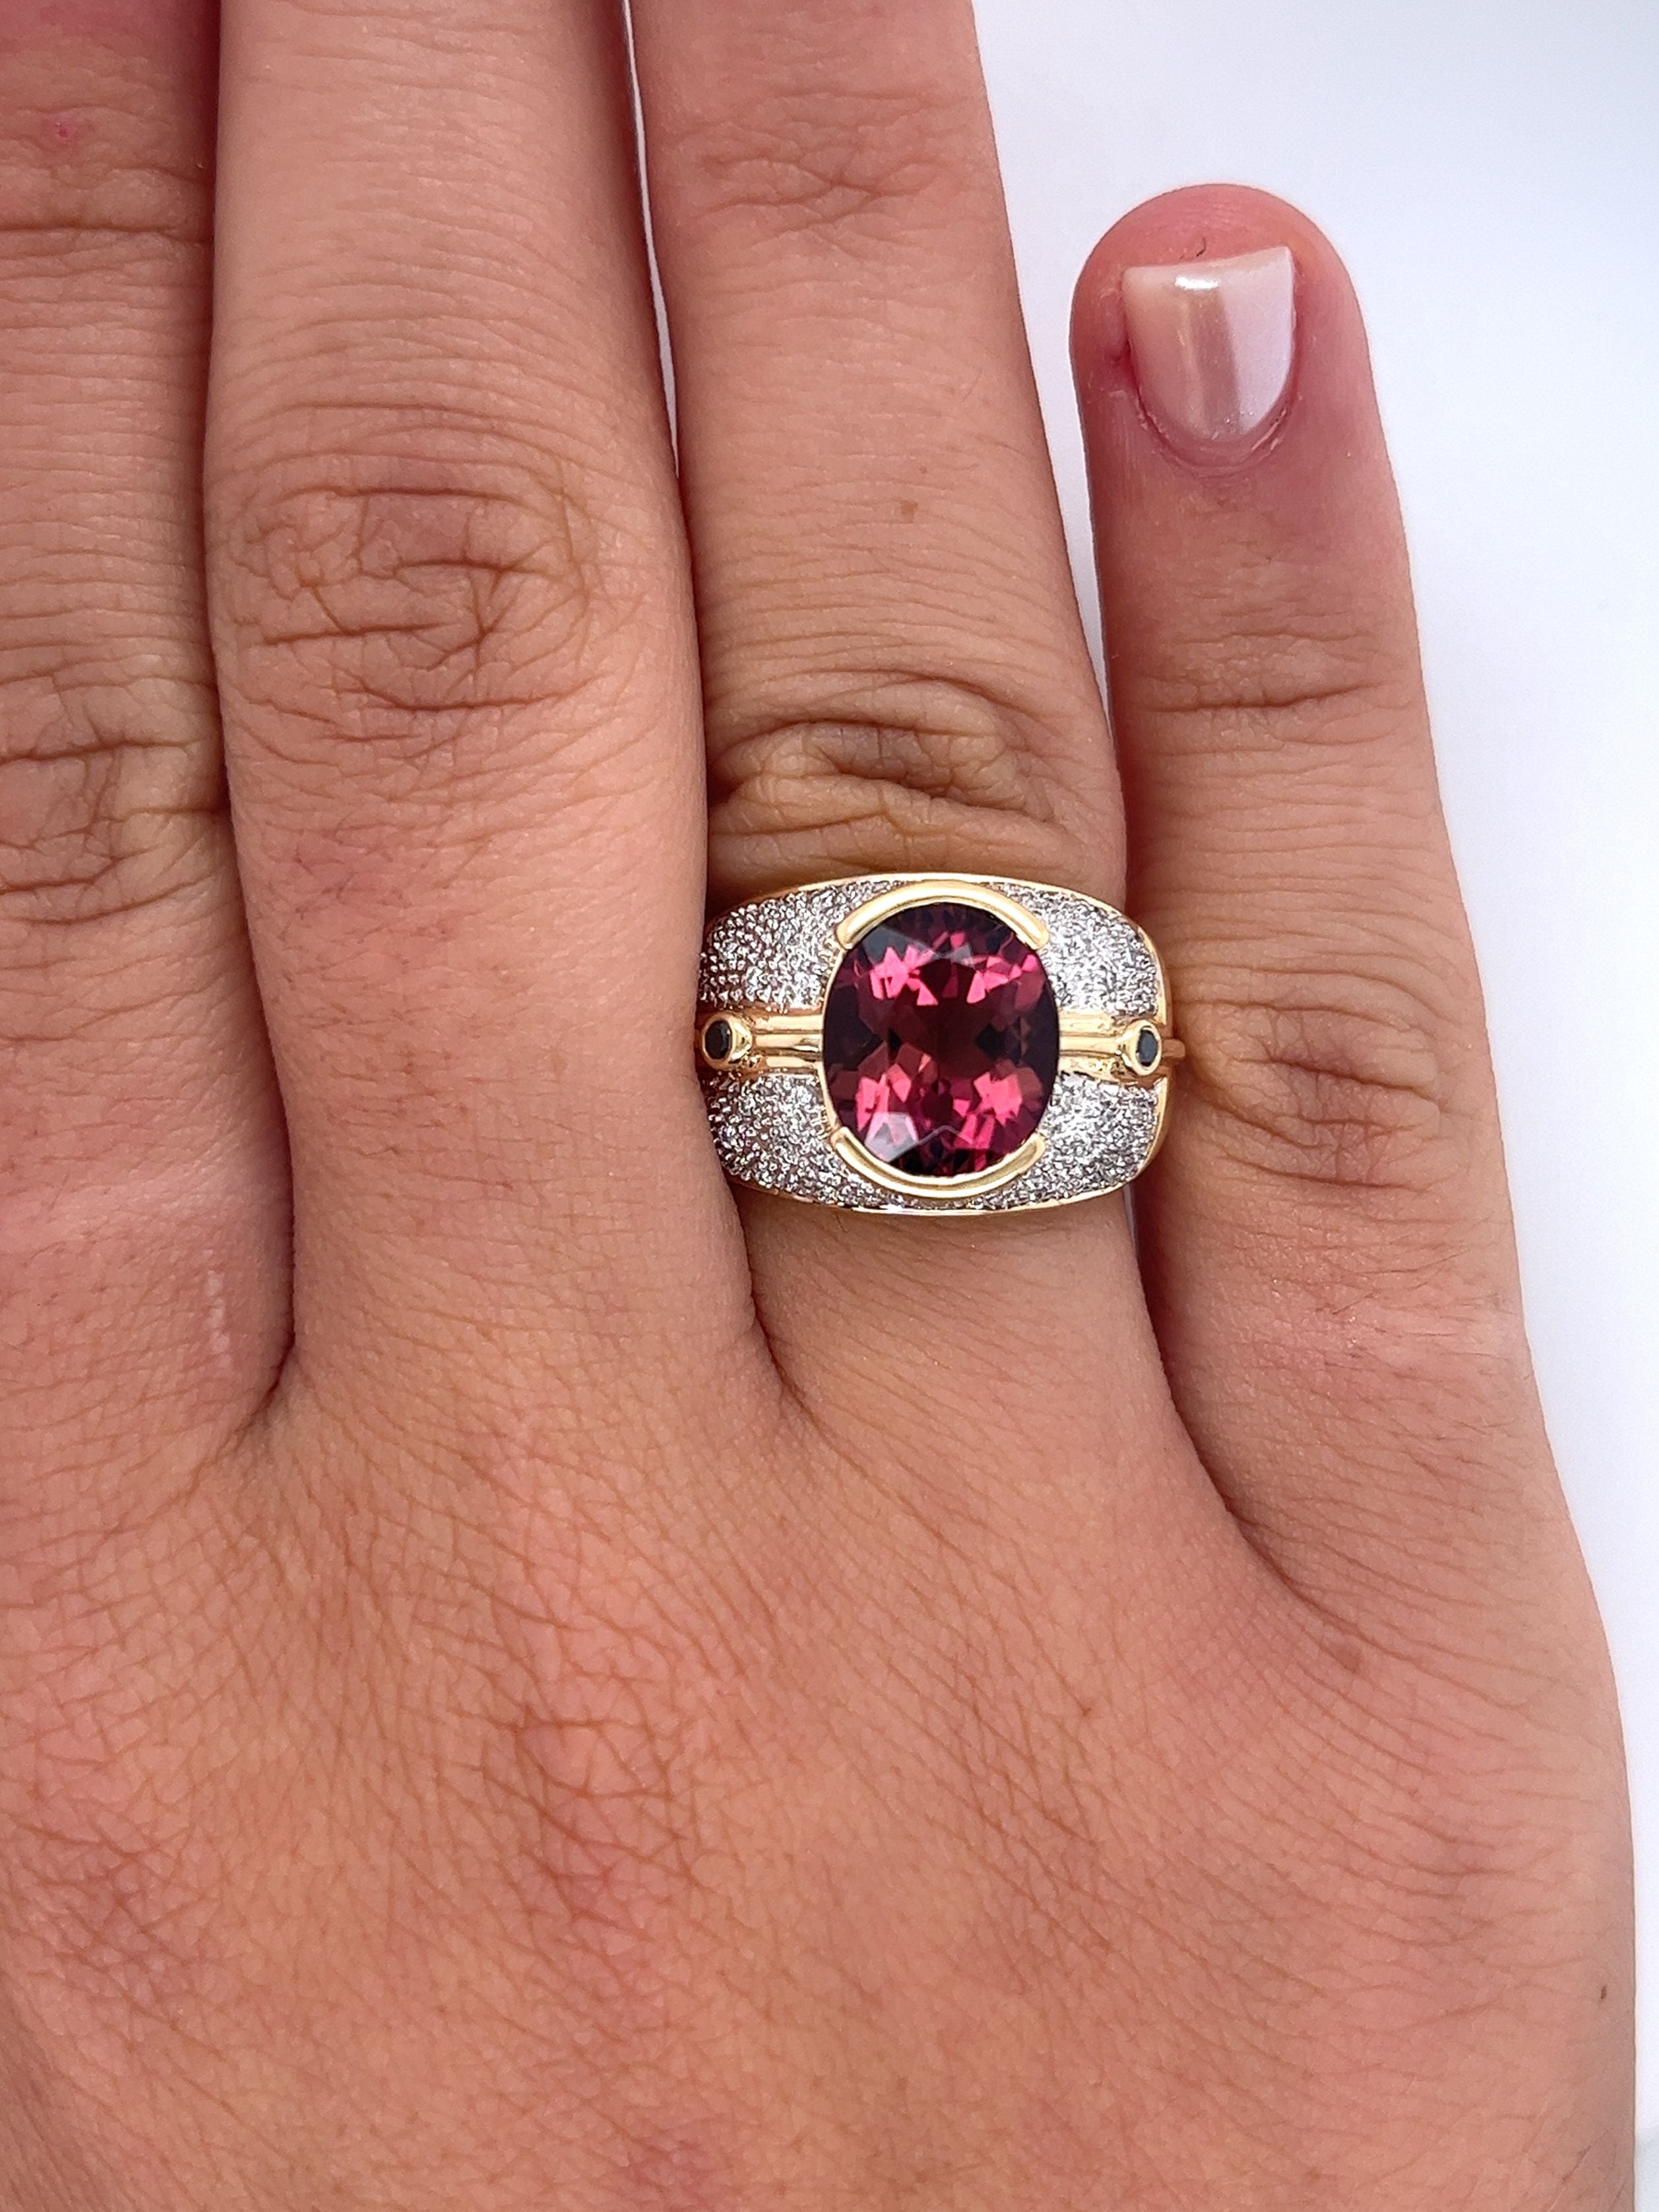 Vintage-6-Carat-Pinkish-Red-Oval-Cut-Tourmaline-Bezel-Set-Unisex-Ring-in-18K-Yellow-Gold-Semi-Precious-Jewelry-2.jpg